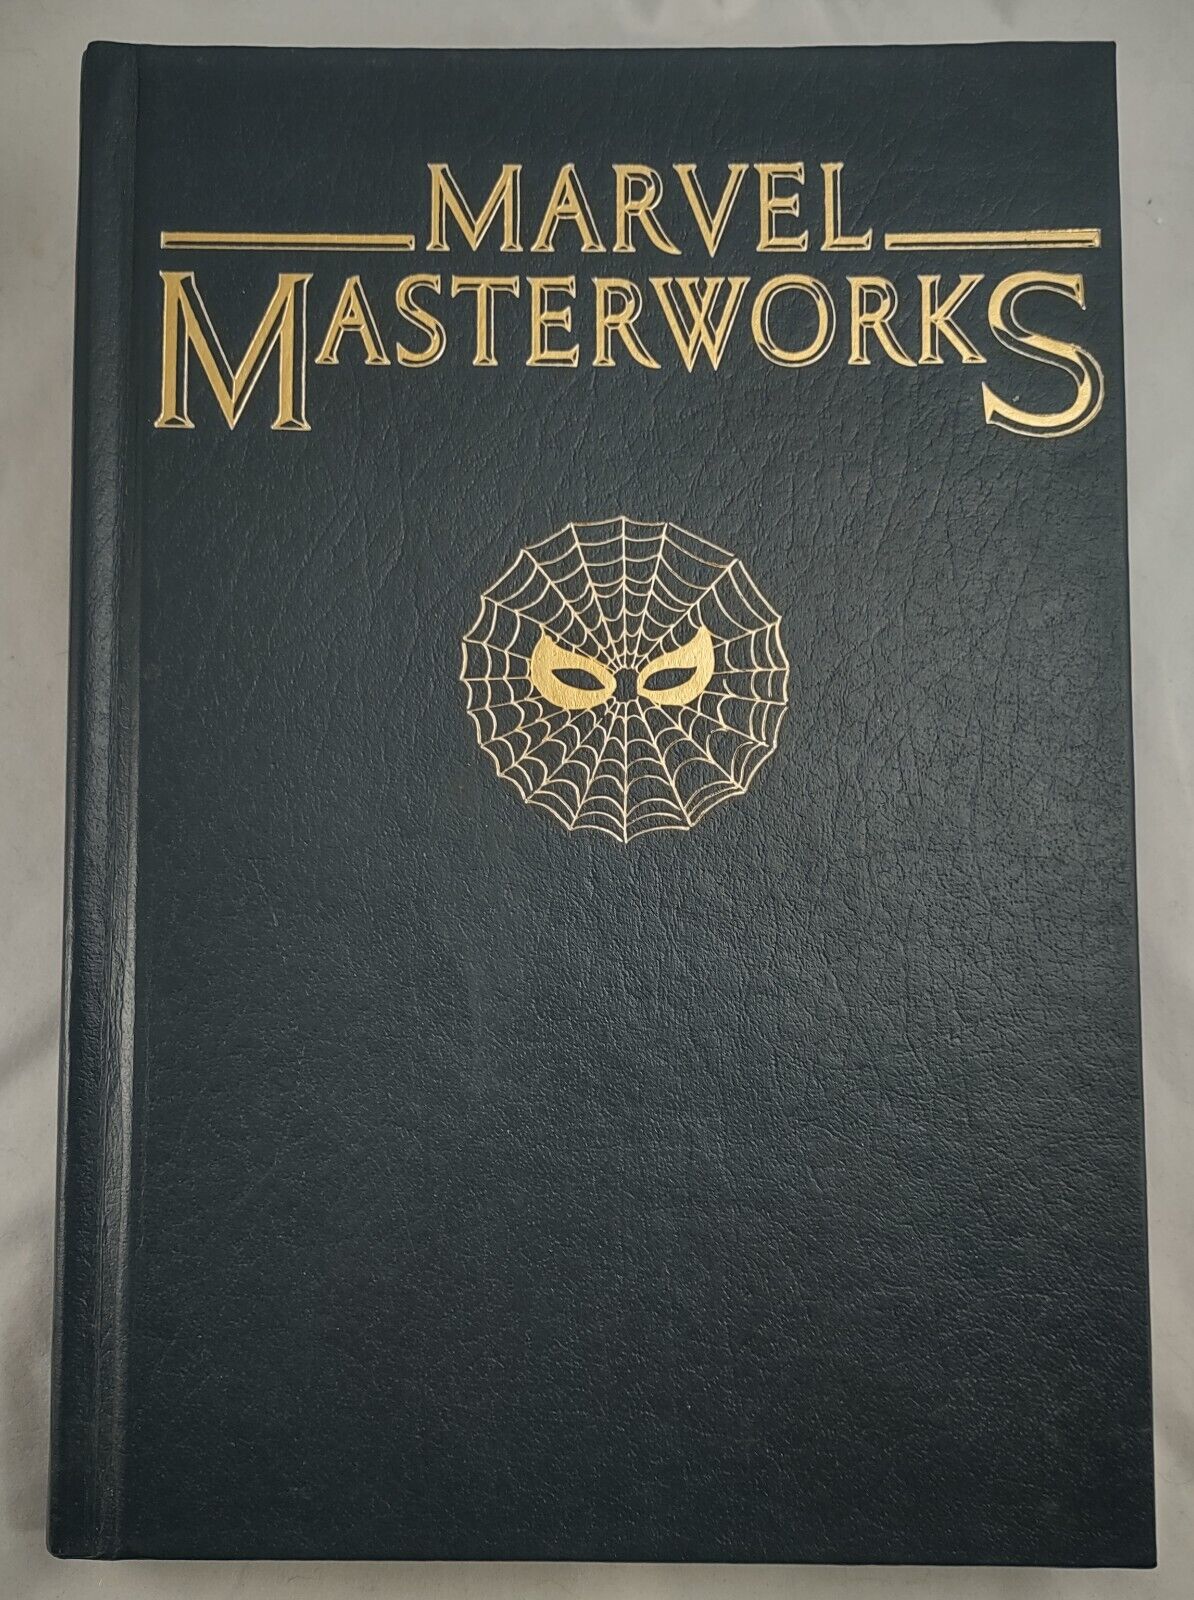 Marvel Masterworks Vol 22 The Amazing Spider-Man Hard Cover - 1st Printing 1992